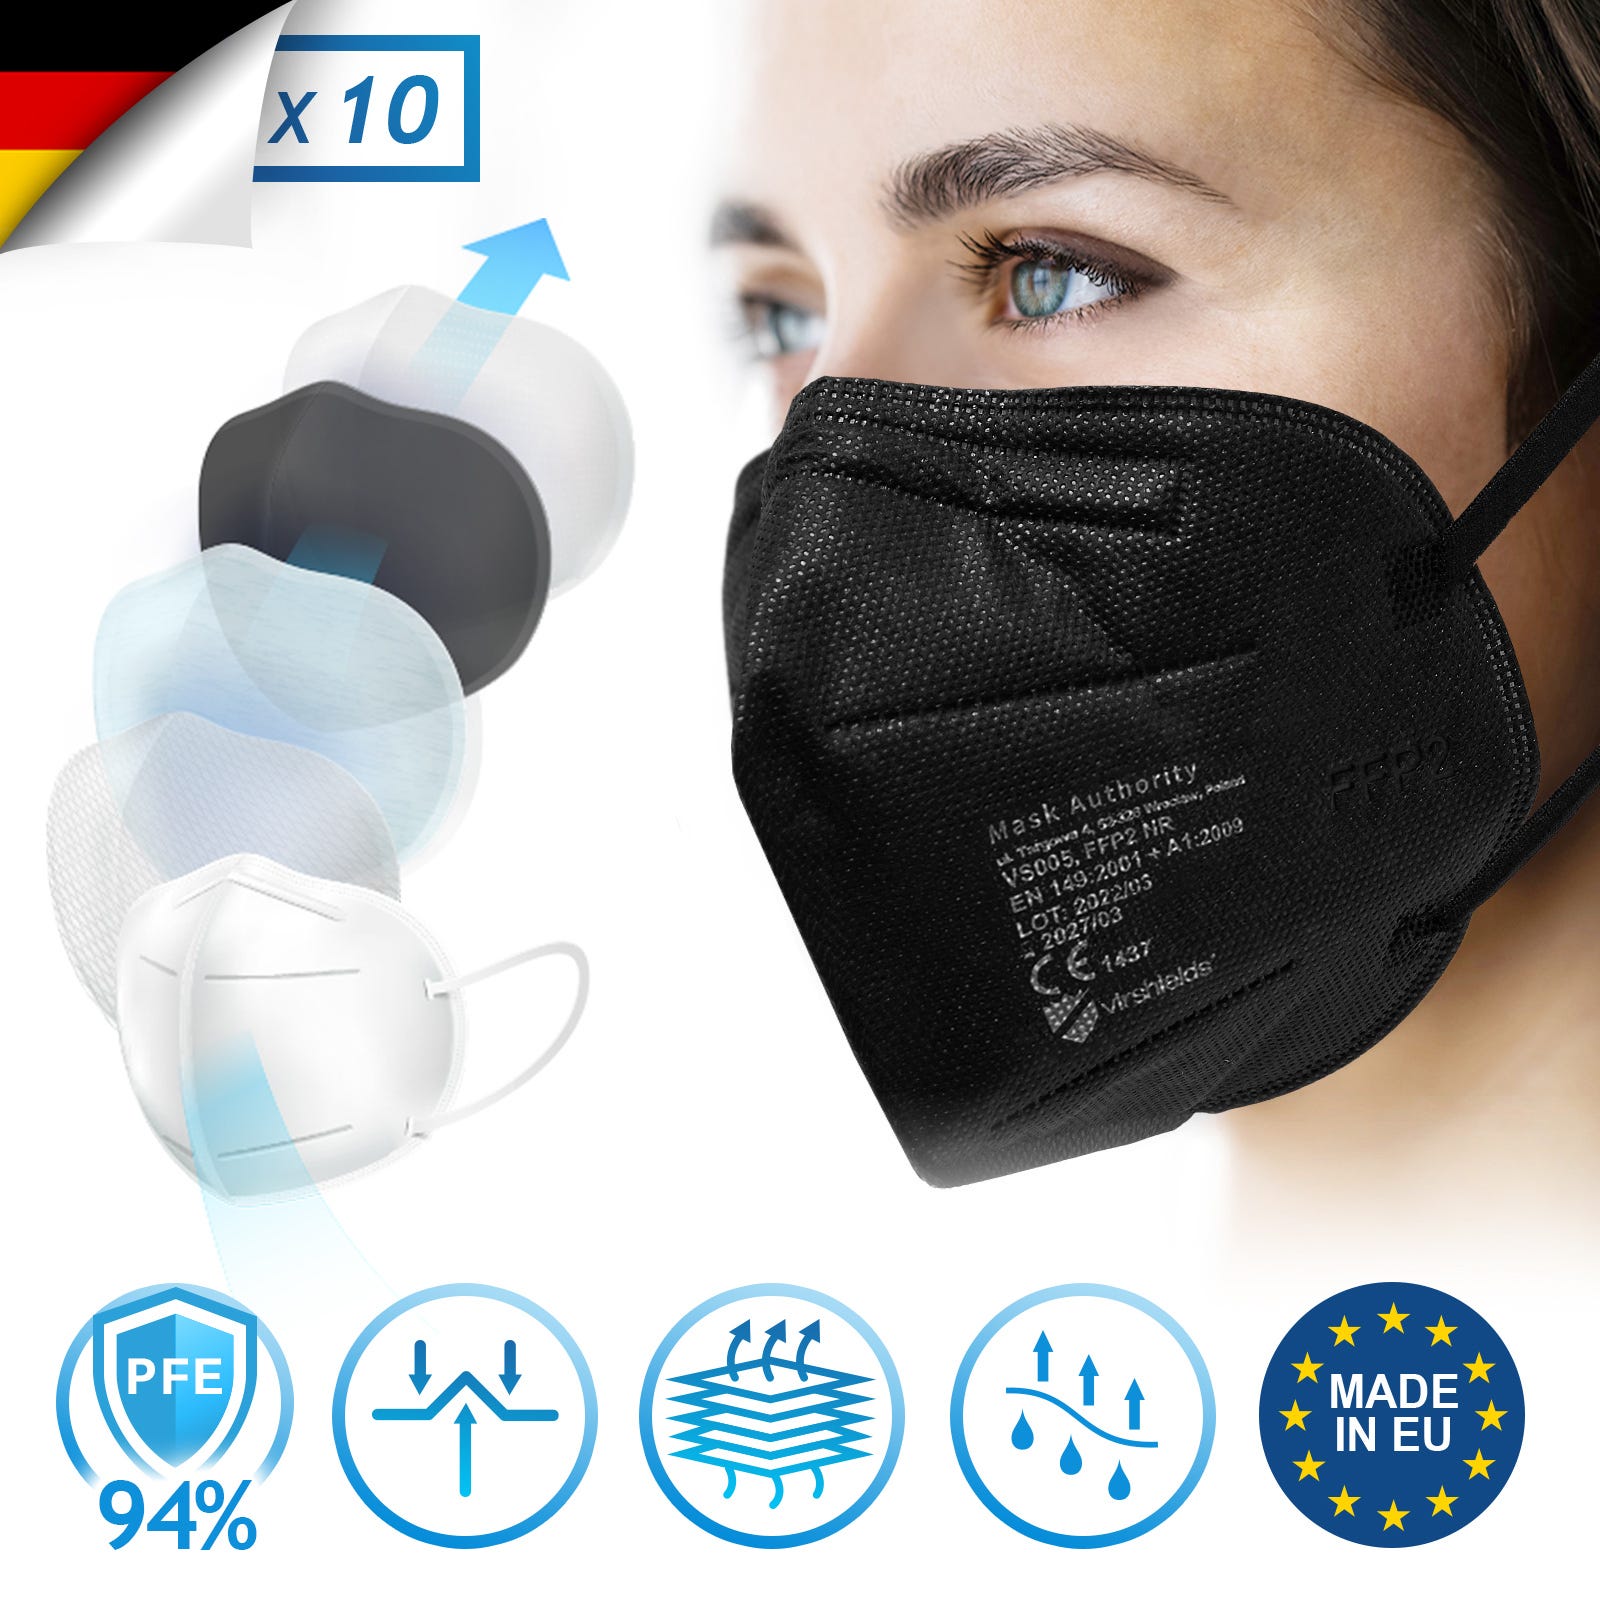 Demi-masque anti-poussière FFP3 boîte de 5 masques Demi-masque anti